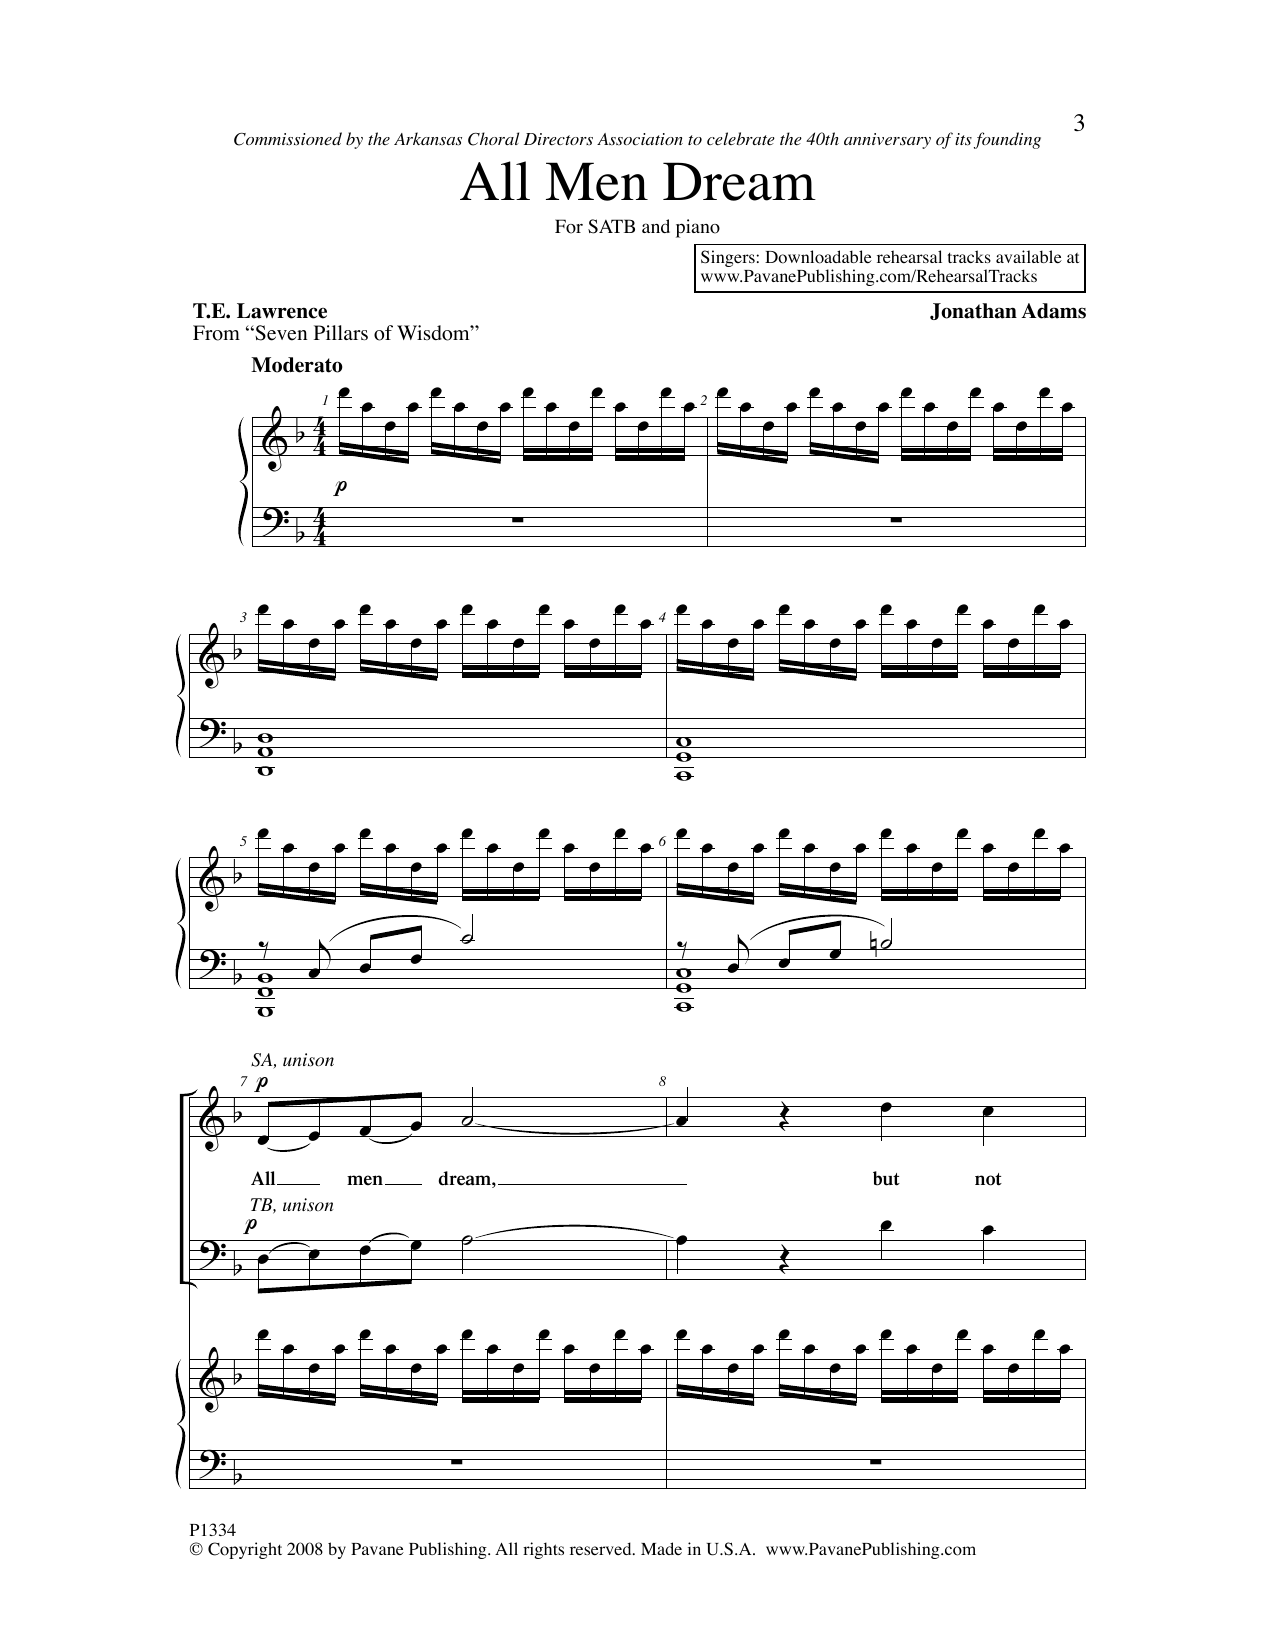 Jonathan Adams All Men Dream Sheet Music Notes & Chords for SATB Choir - Download or Print PDF